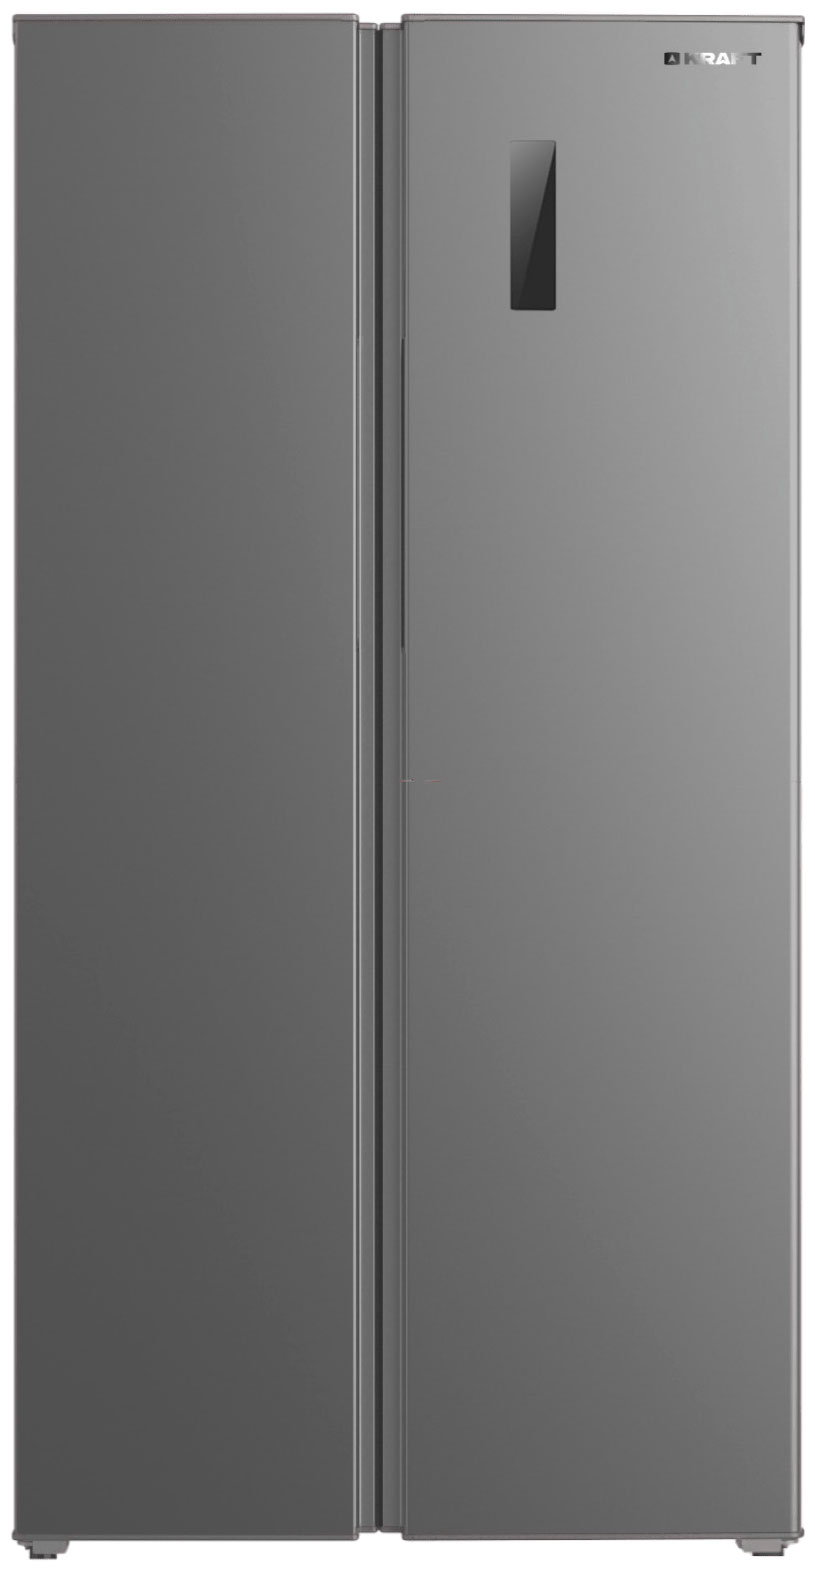 фото Холодильник kraft kf-ms5851si серебристый